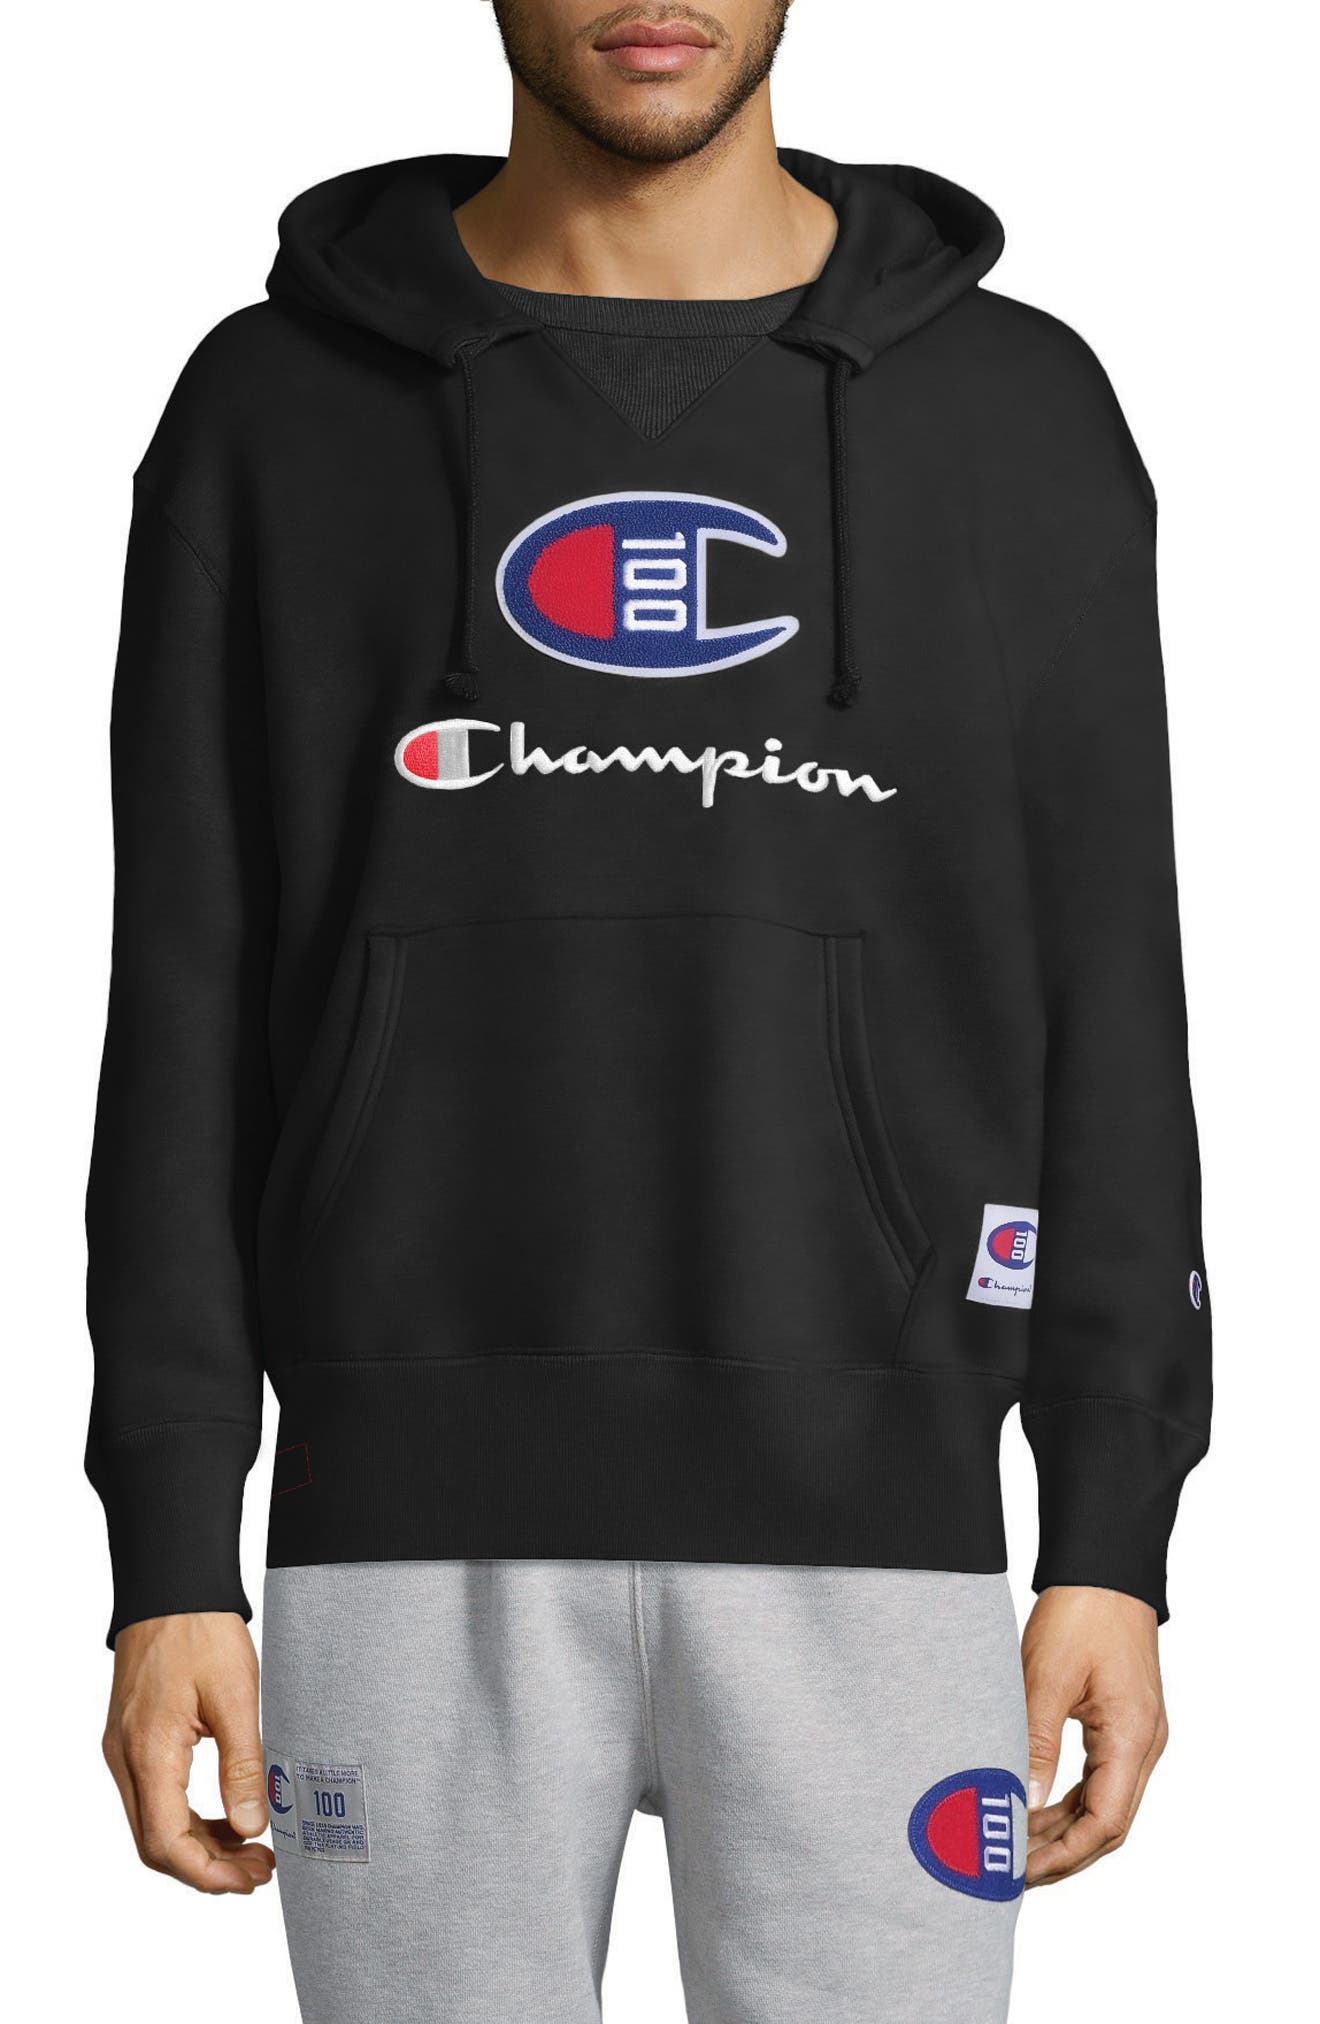 100 champion hoodie